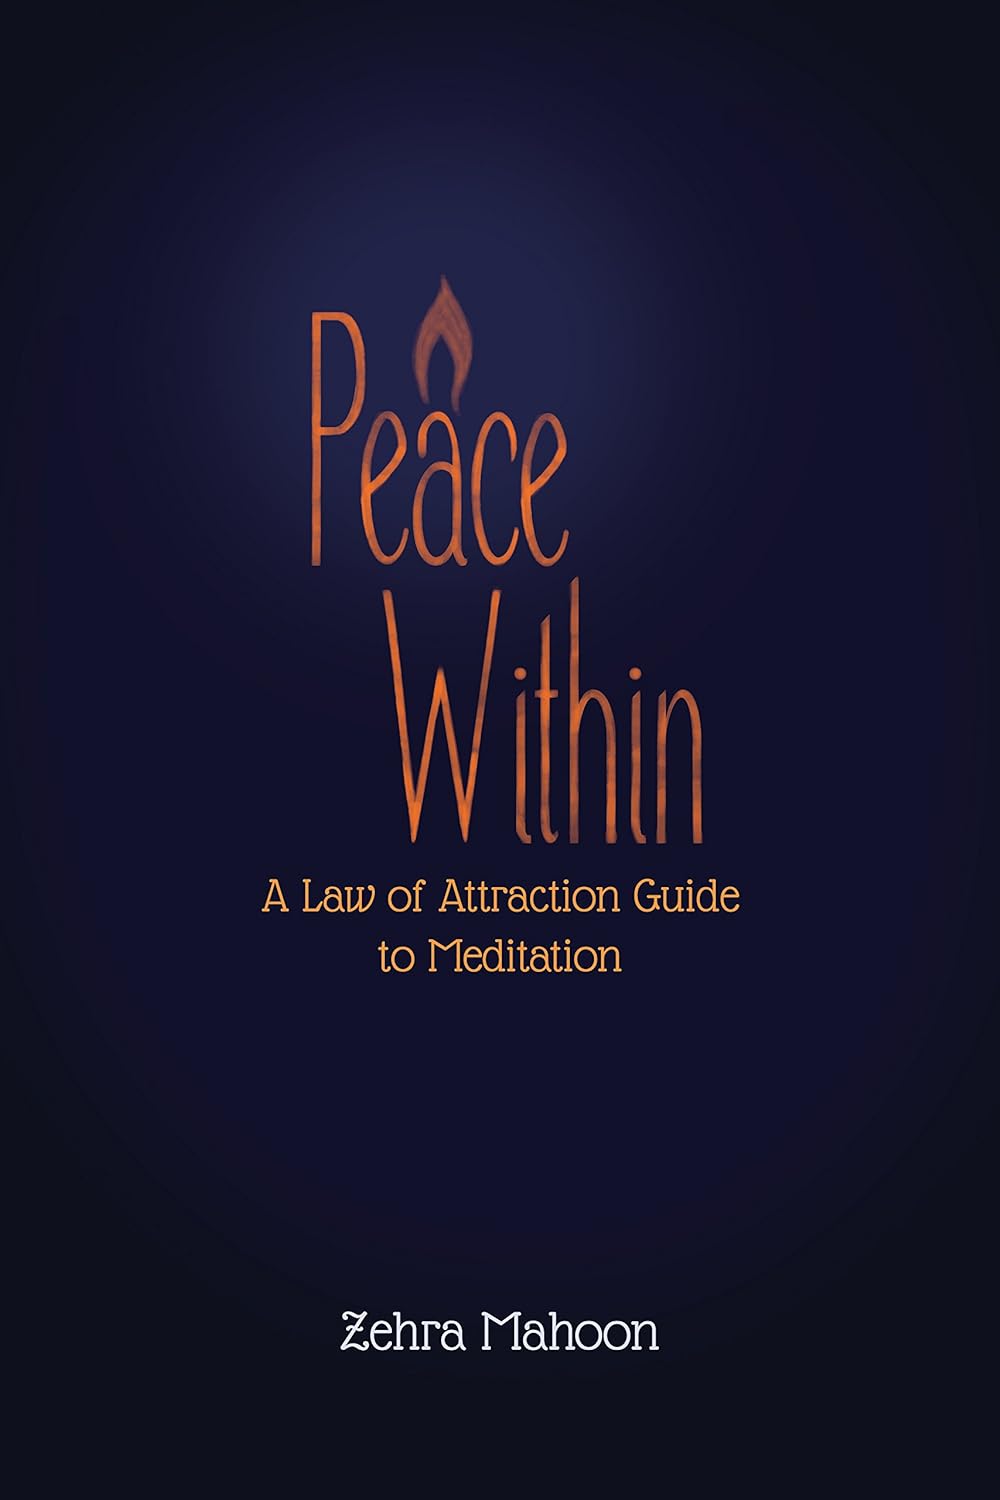 Peace Within by Zehra Mahoon